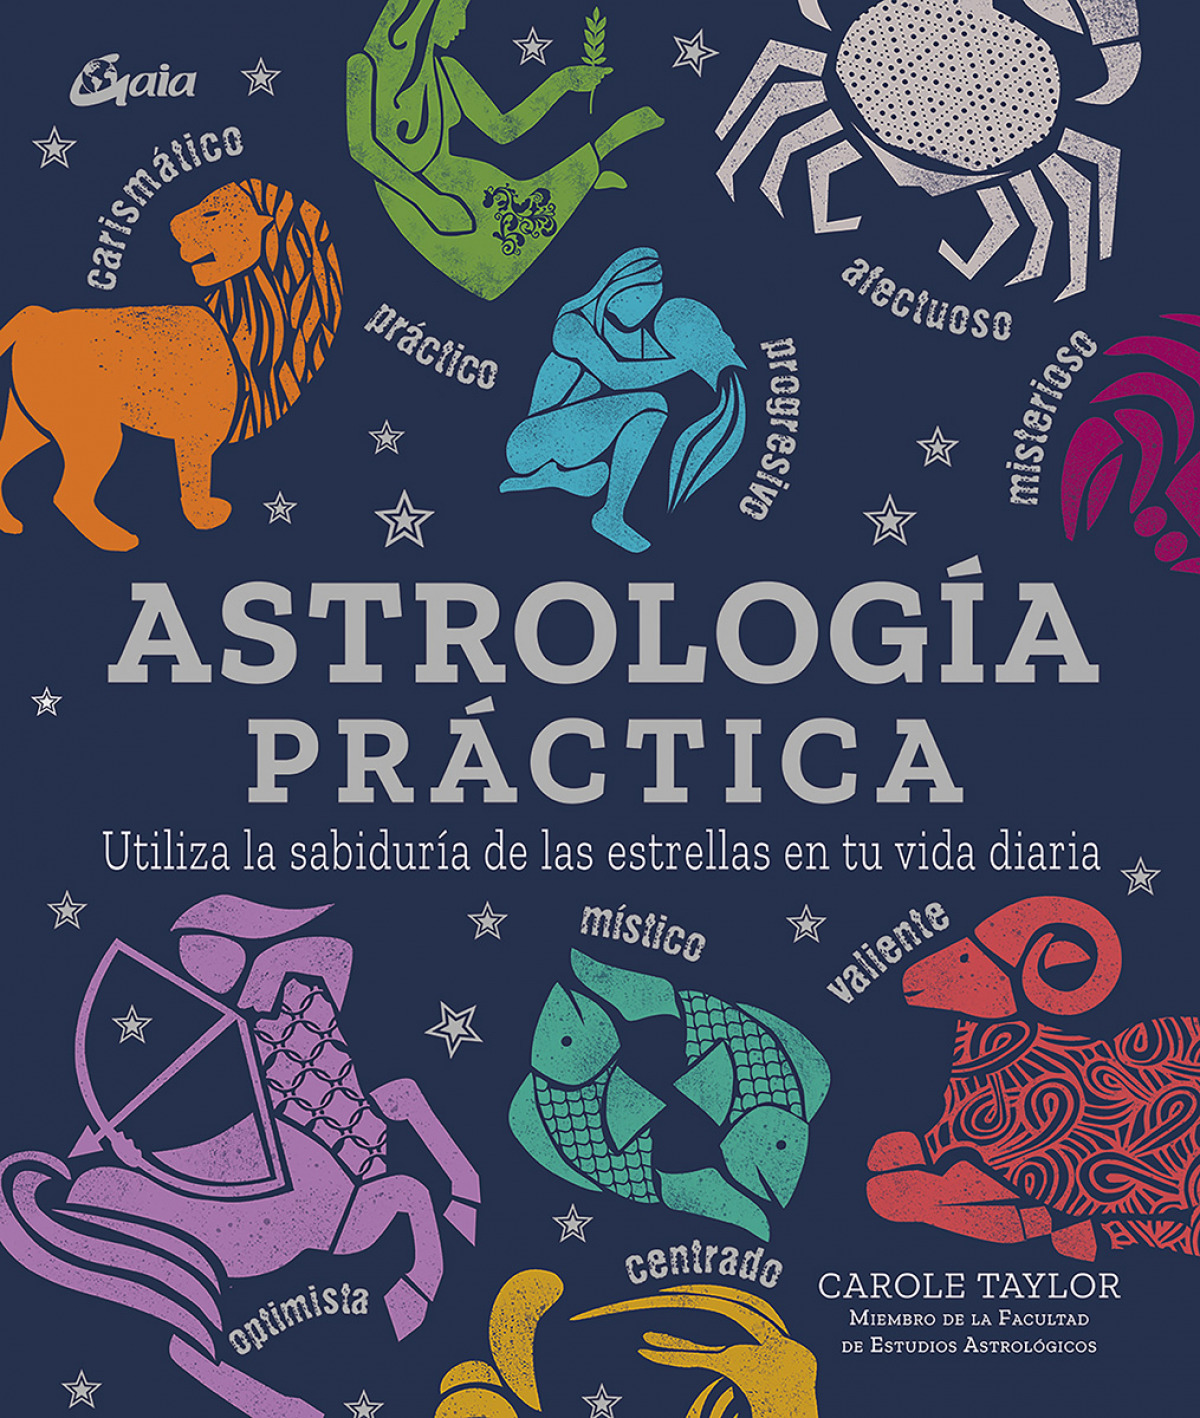 Astrologa Prctica